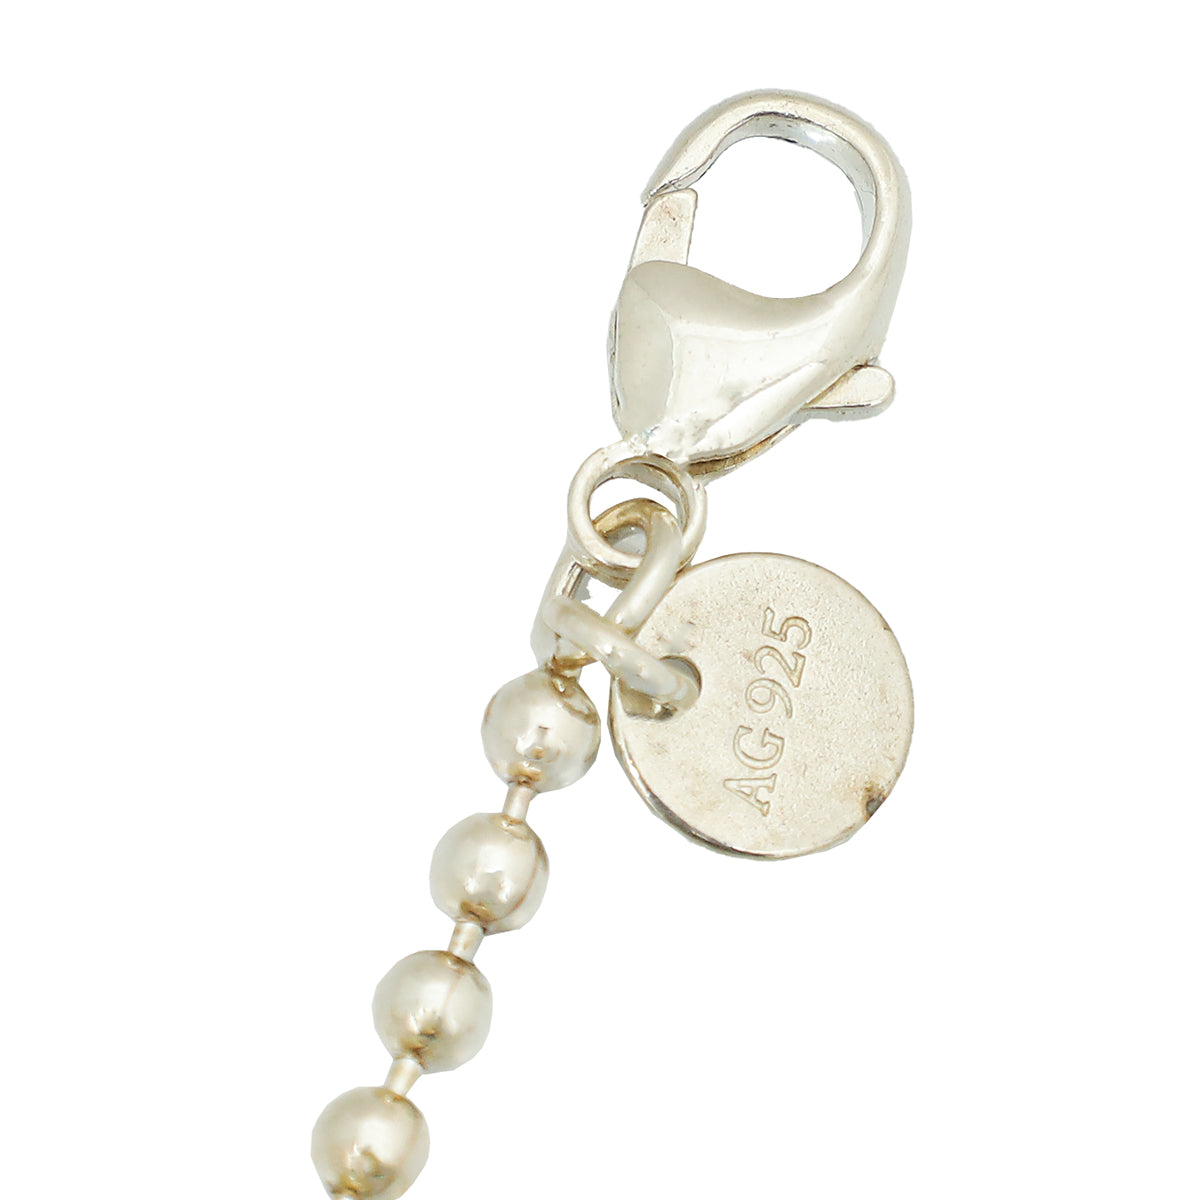 Tiffany & Co Sterling Silver Beaded Heart Key Pendant Necklace